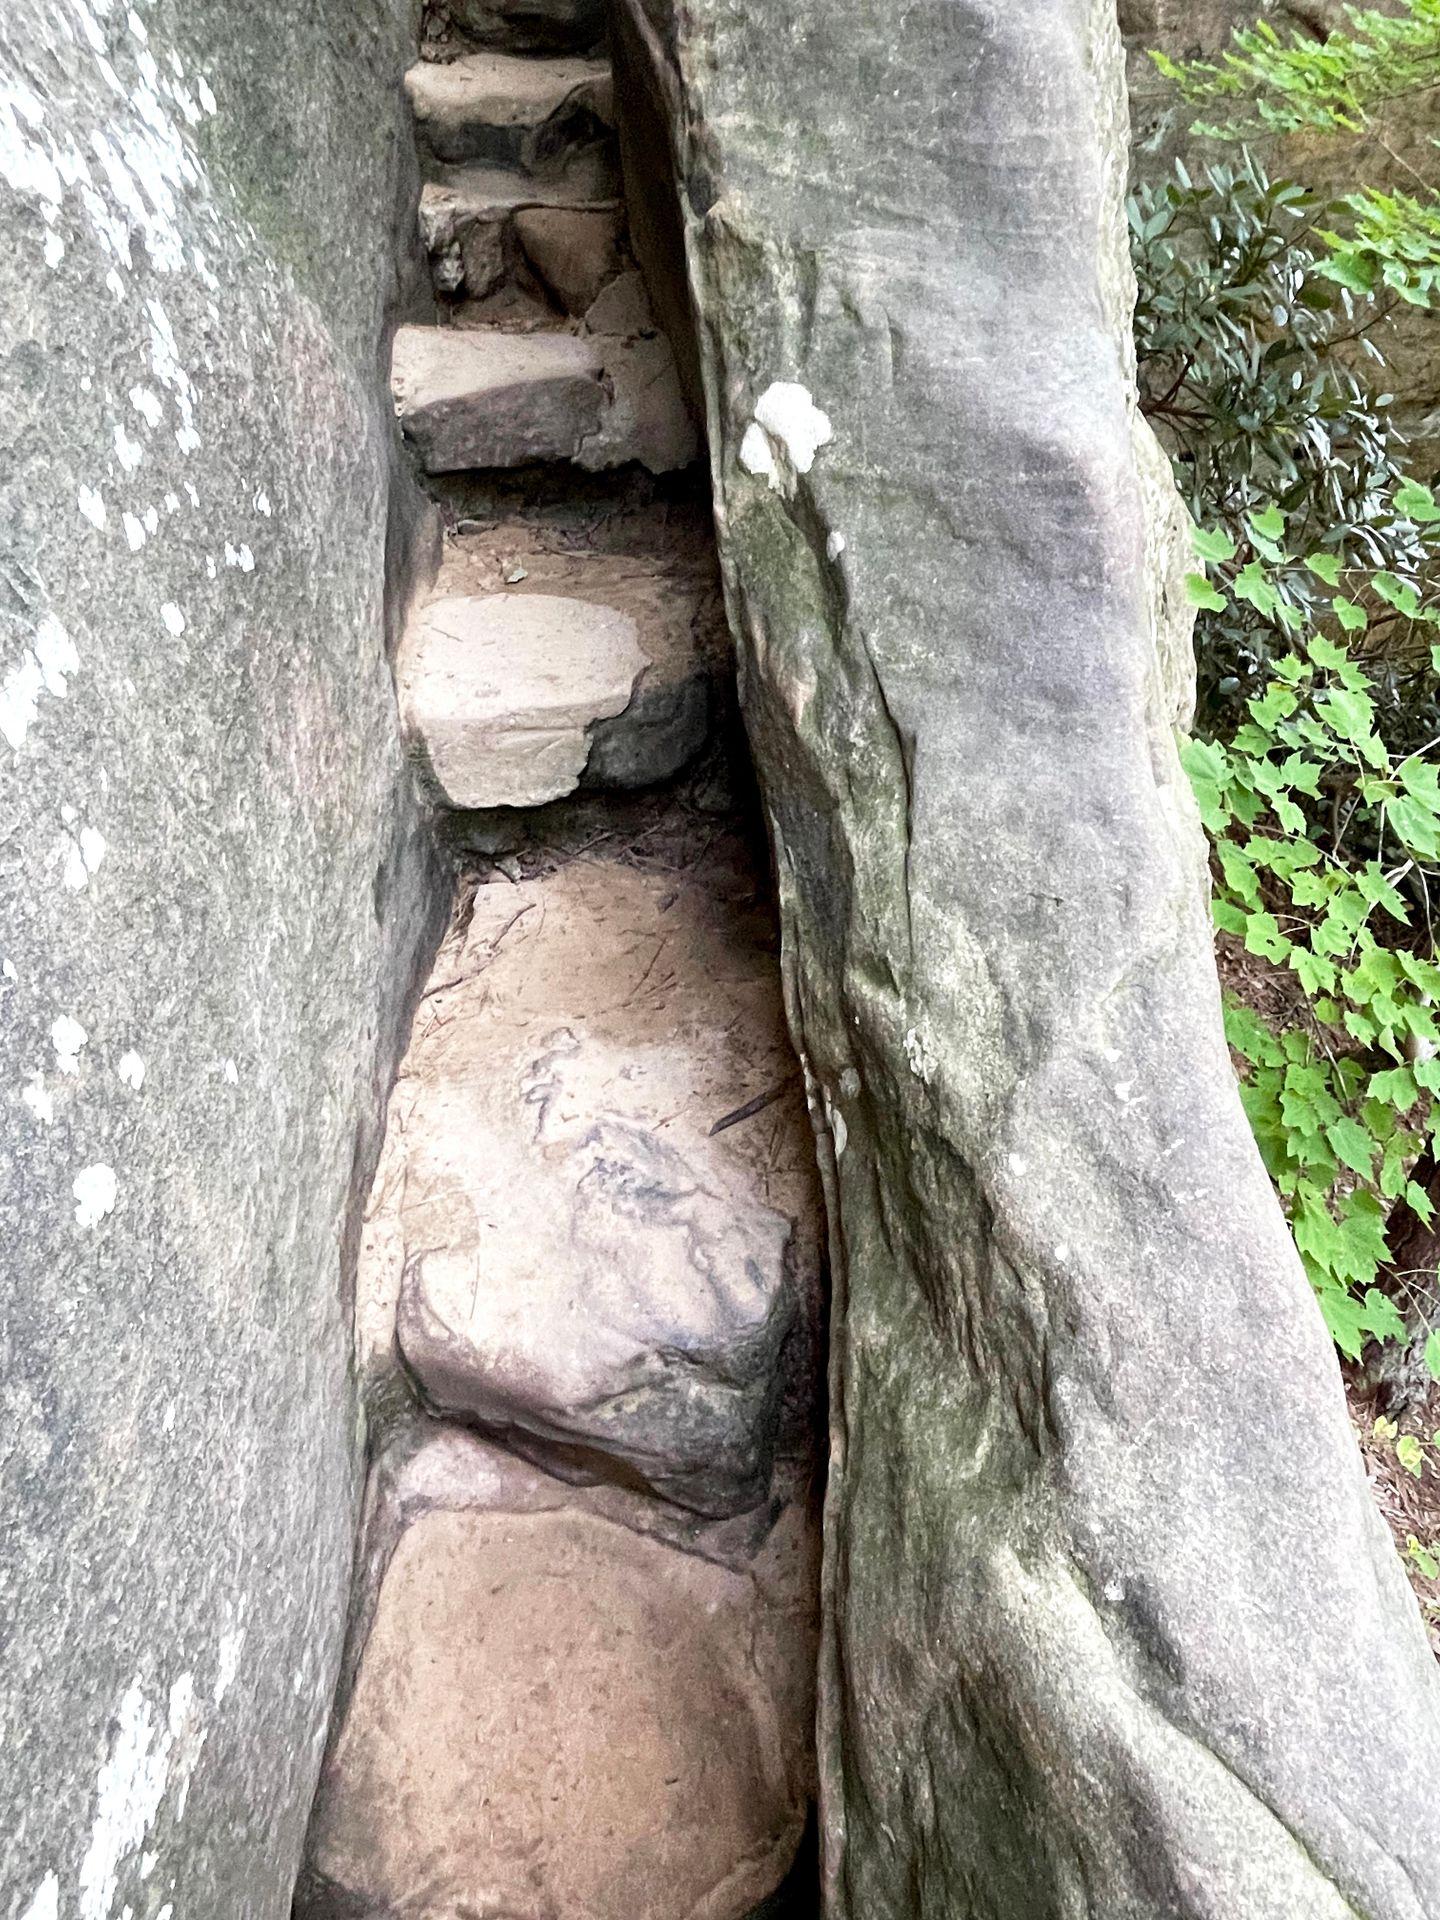 A narrow area of rock steps